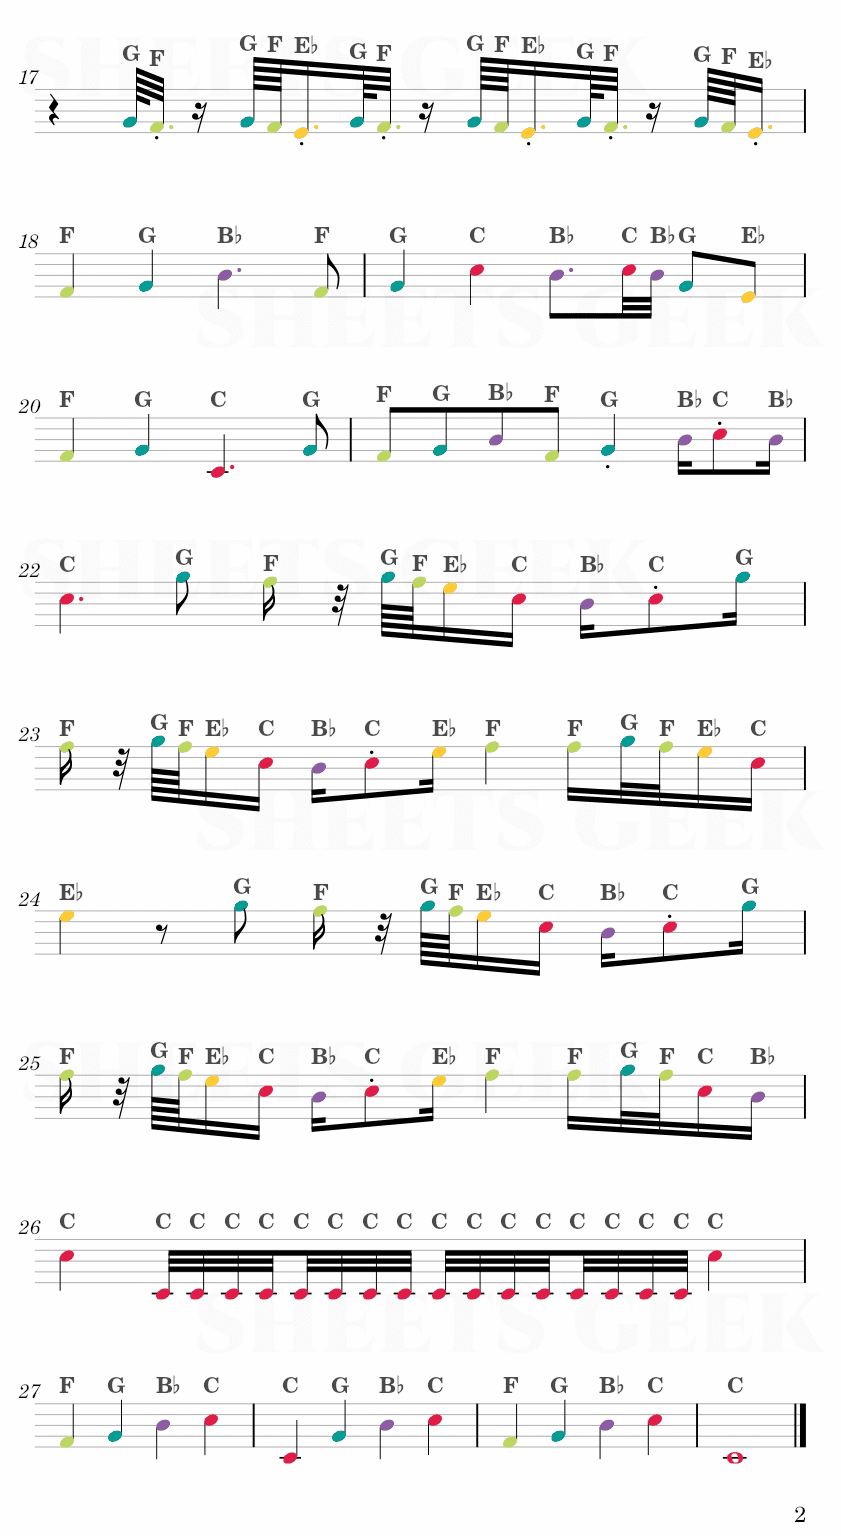 Rex Incognito - Genshin Impact Easy Sheet Music Free for piano, keyboard, flute, violin, sax, cello page 2